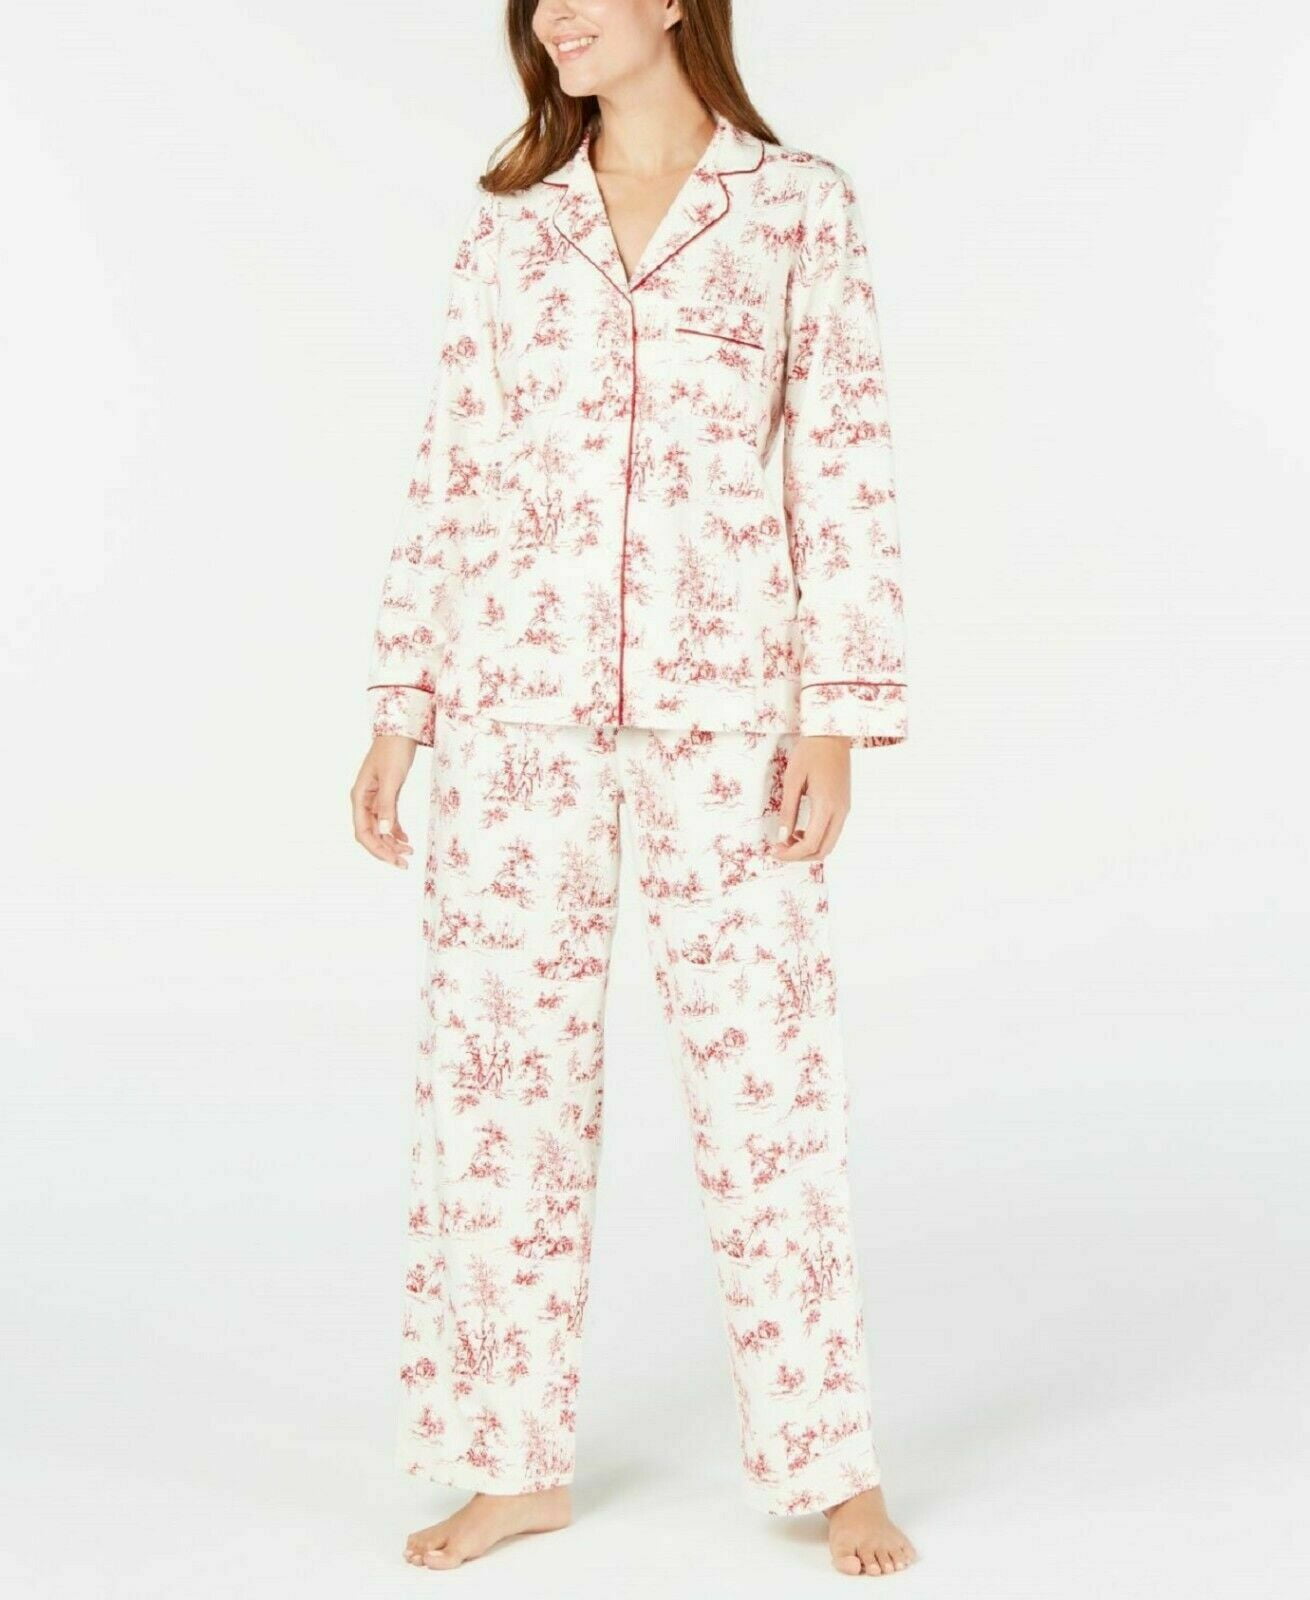 Women's Printed Cotton Pajama Set Pink Plaid Charter Club Size XXXL New 